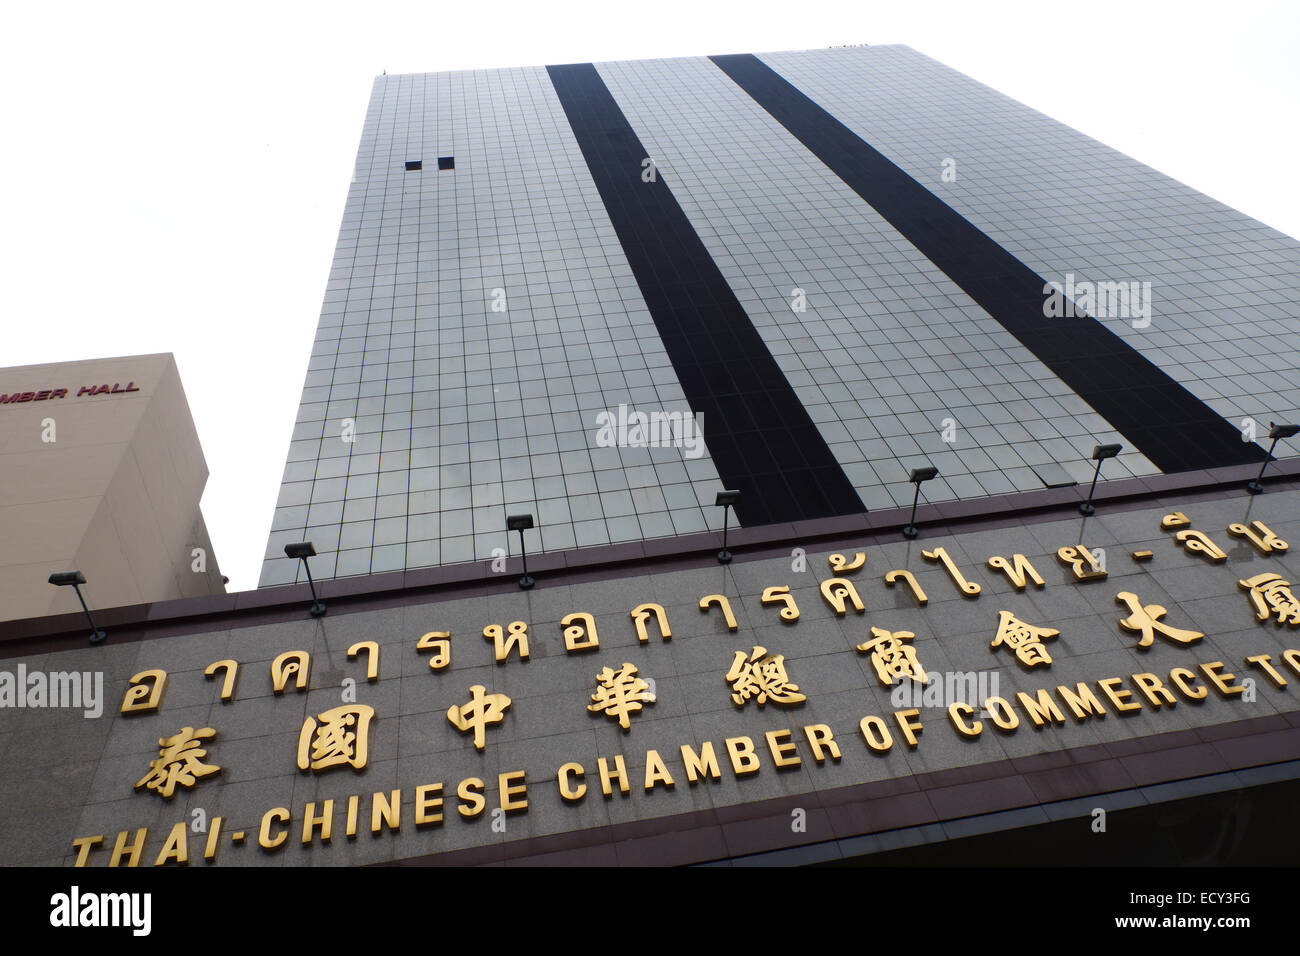 Thai Chinese chamber of commerce tower in Bangkok, Thailand. Stock Photo